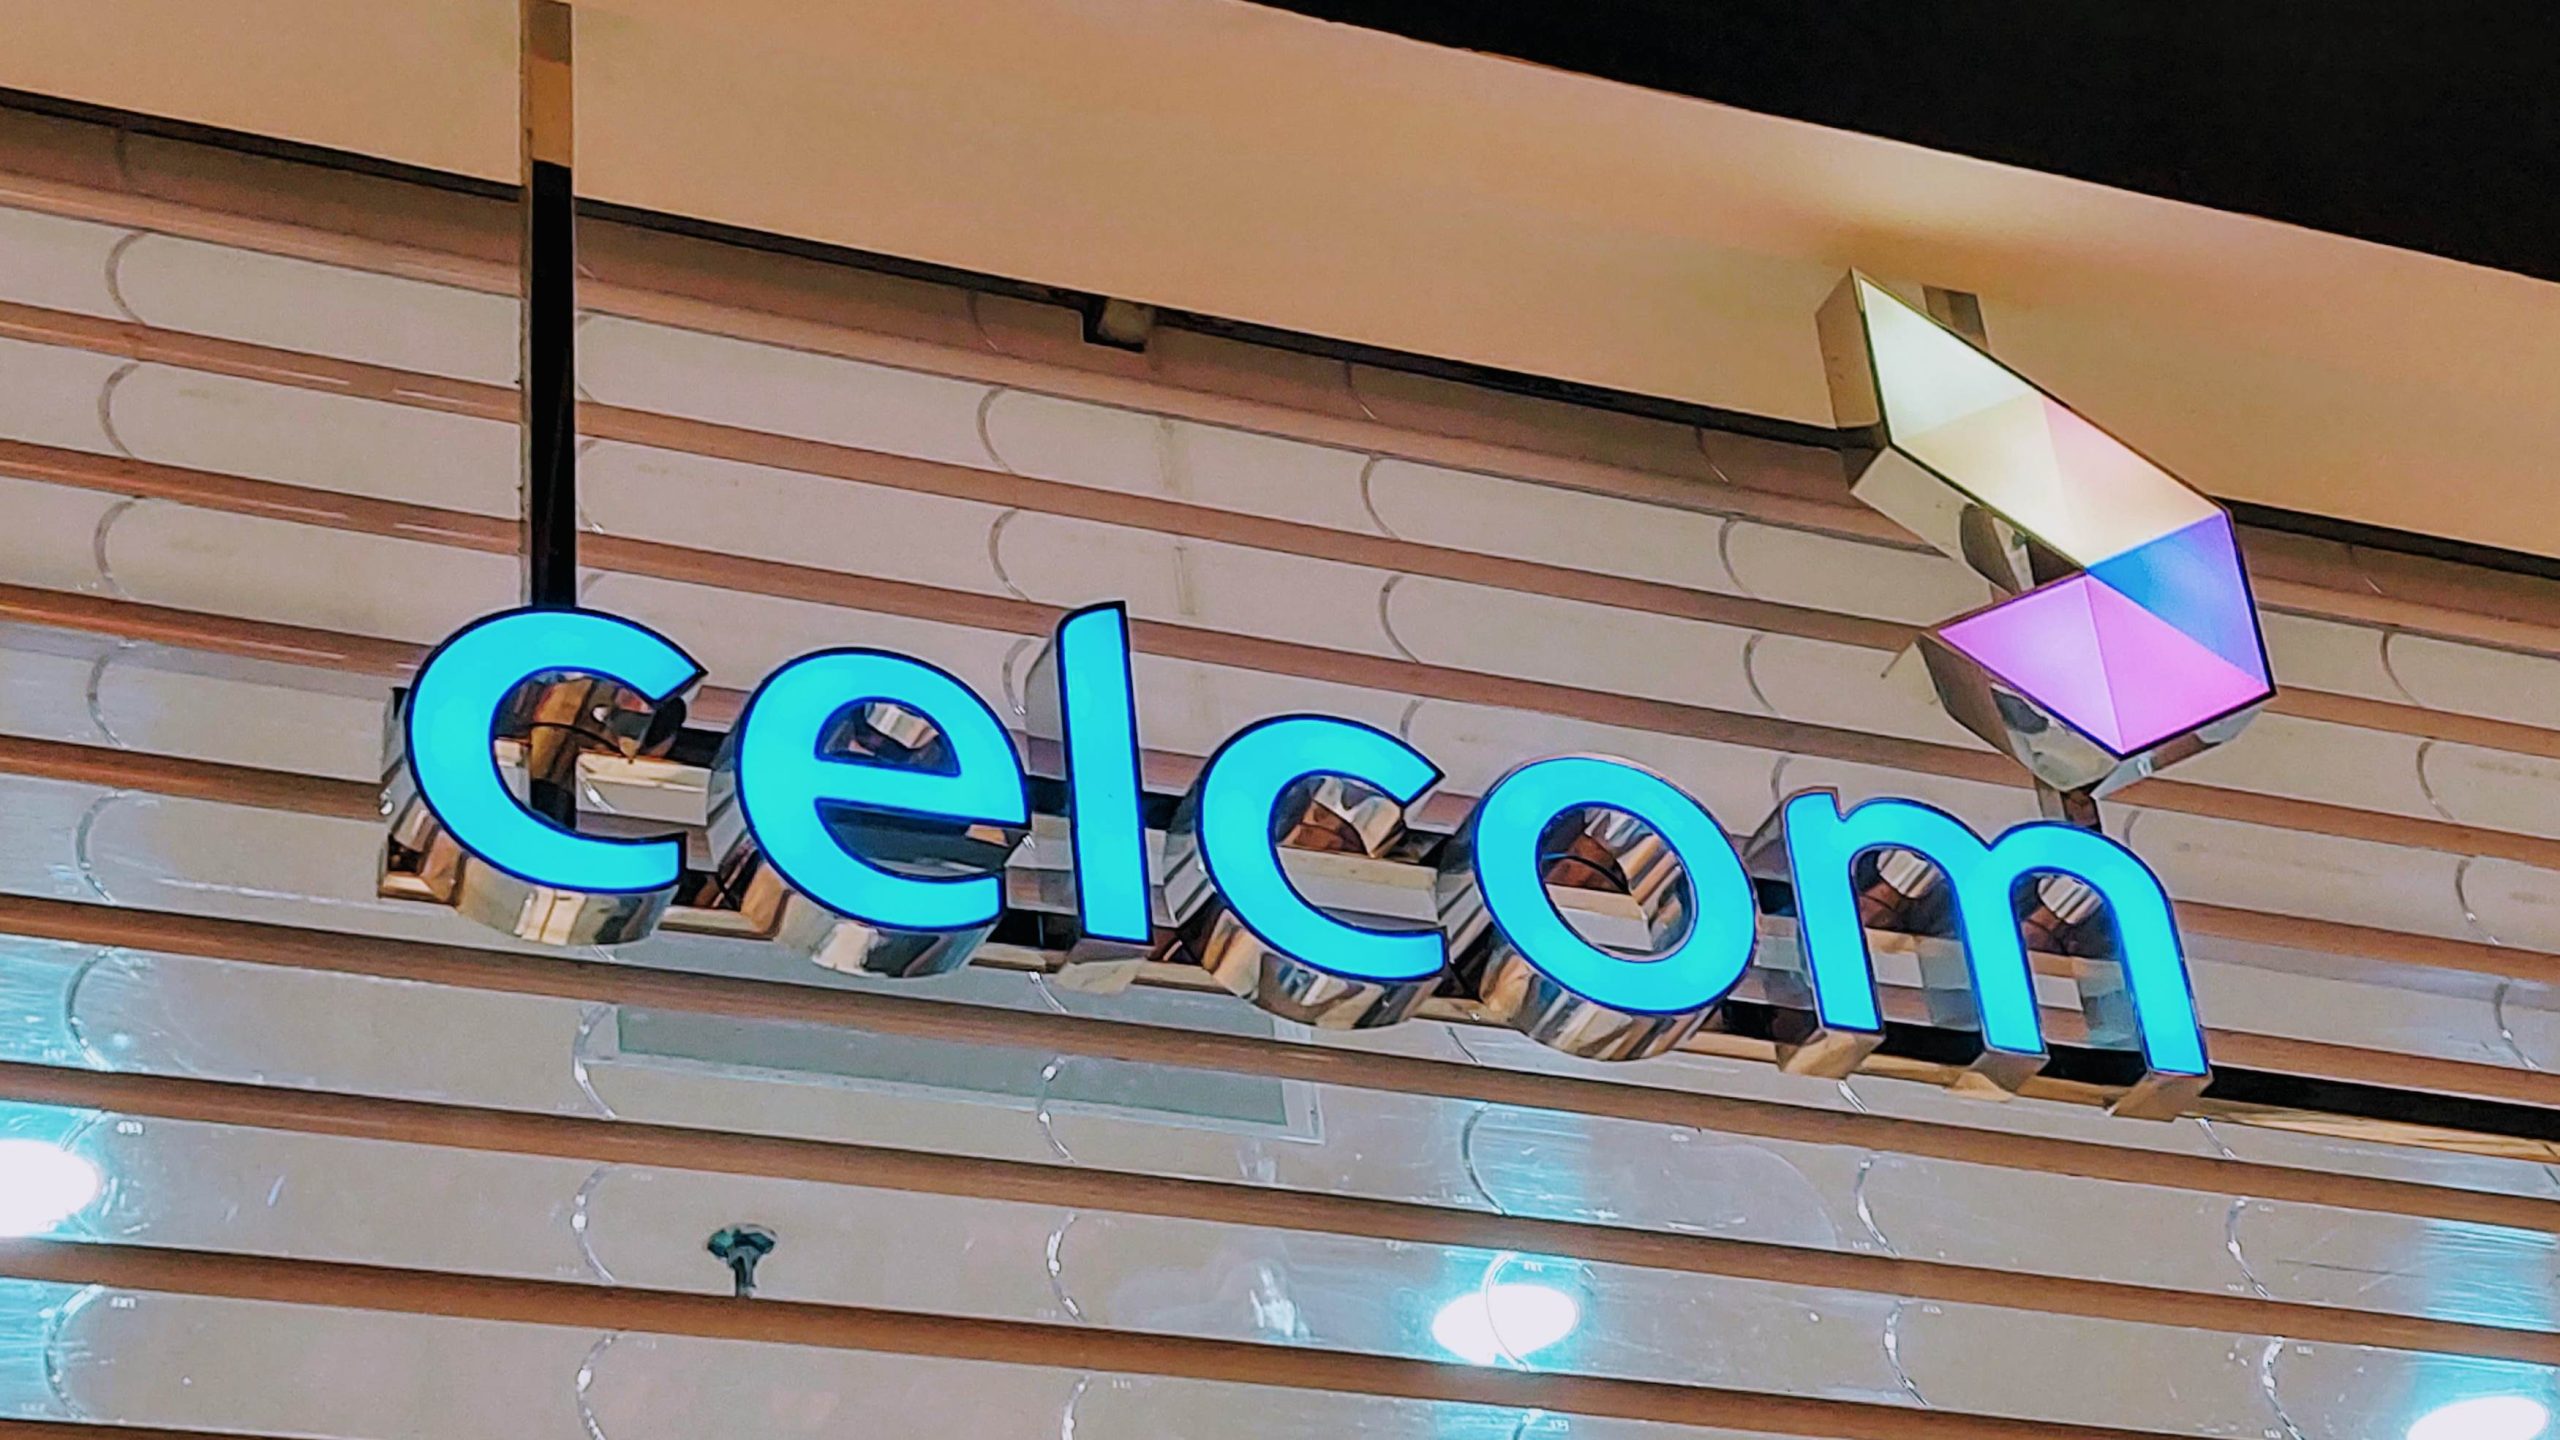 Celcom Kini Menawarkan Pelan “Celcom Home Wireless 5G” Dengan Kuota 1TB Pada Harga RM149 Sebulan